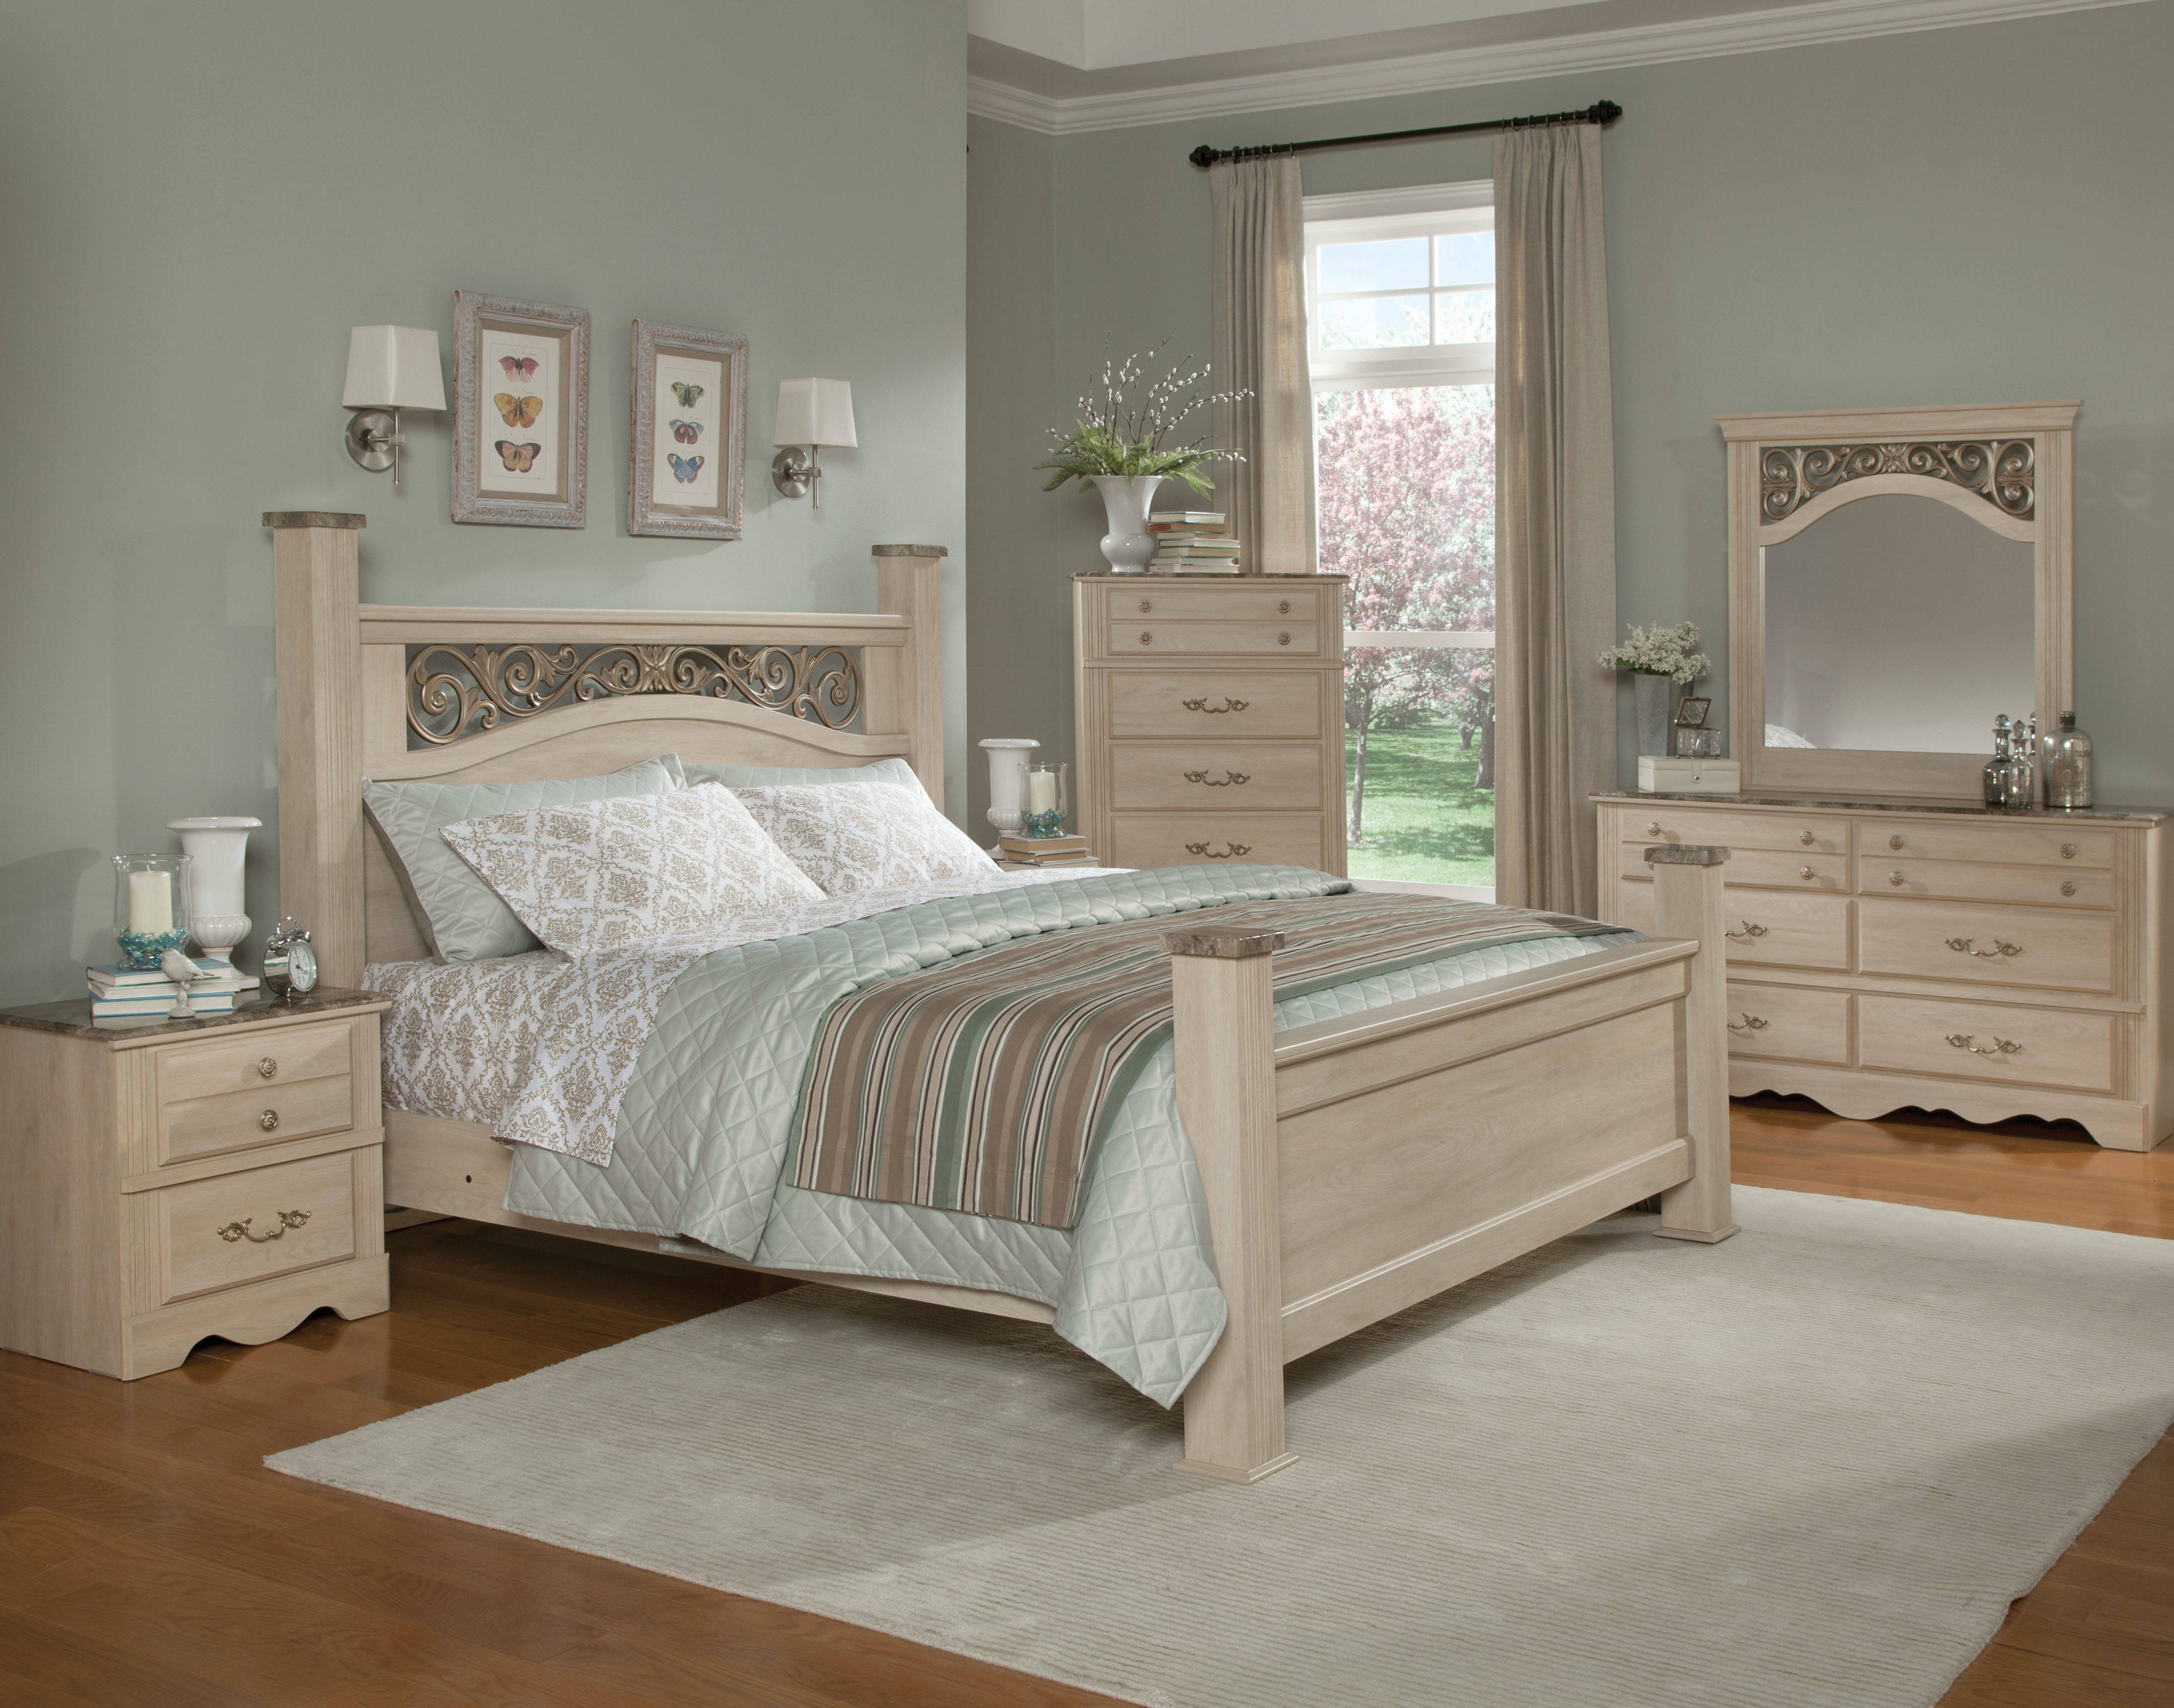 Torina Traditional Cream Wood 5pc Bedroom Set Wqueen Poster Bed regarding dimensions 4200 X 3300